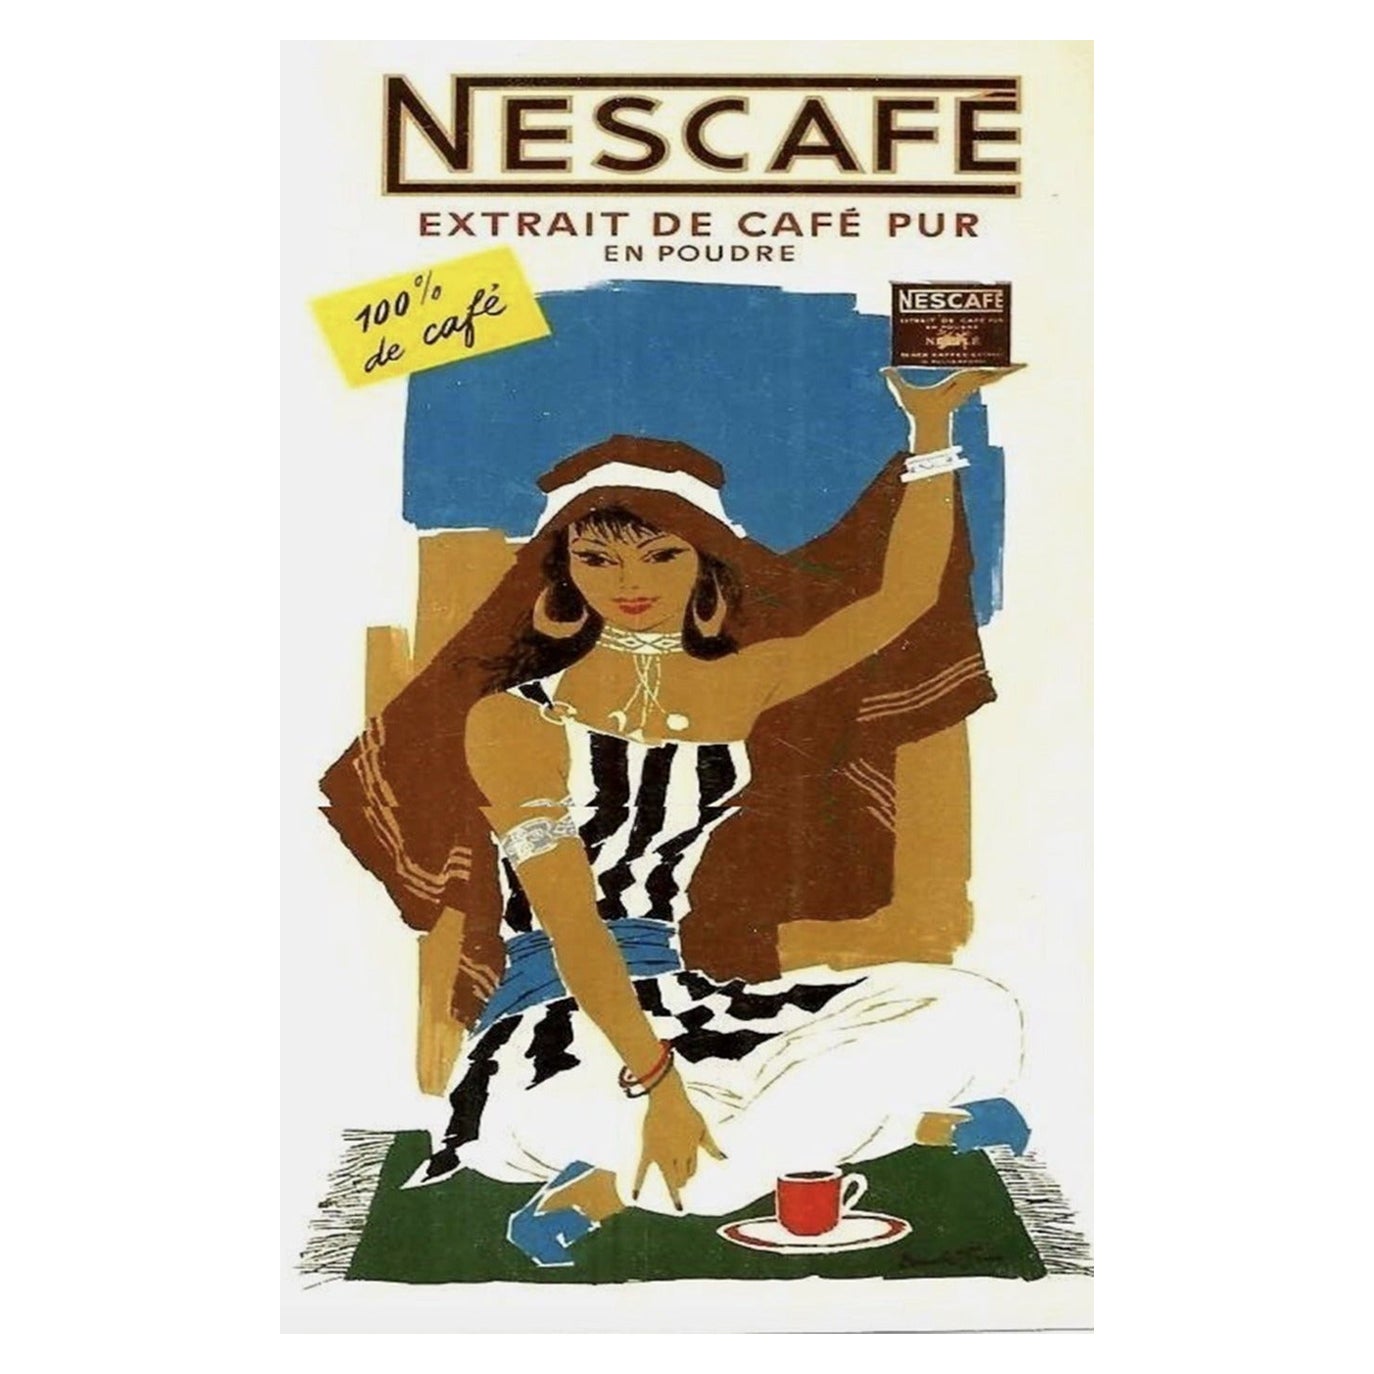 Nescafe - Pure Coffee Extract - Affiche originale vintage de 1960 en vente